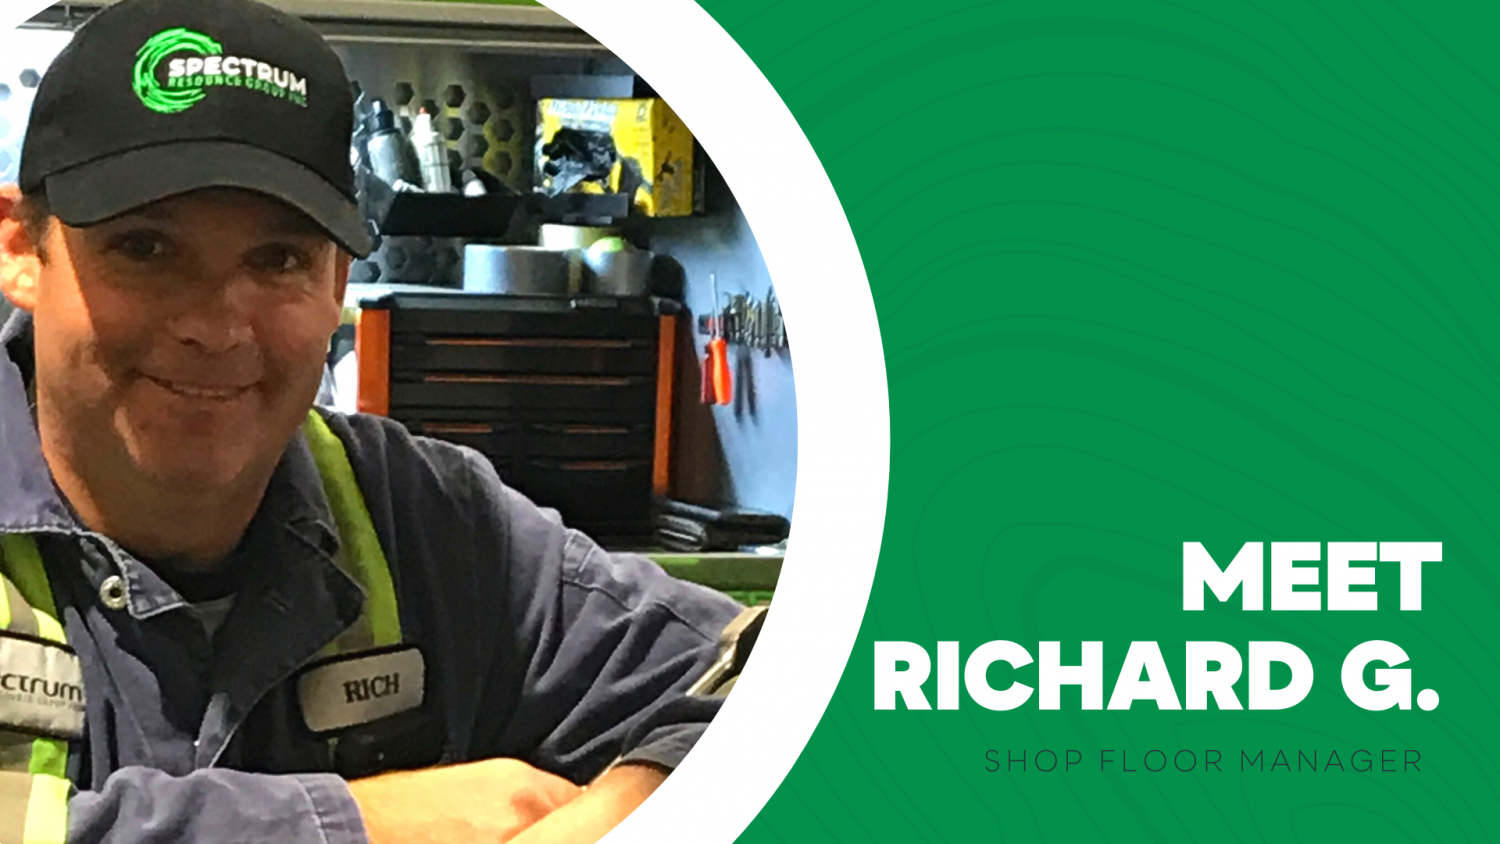 Richard Green Employee Spotlight